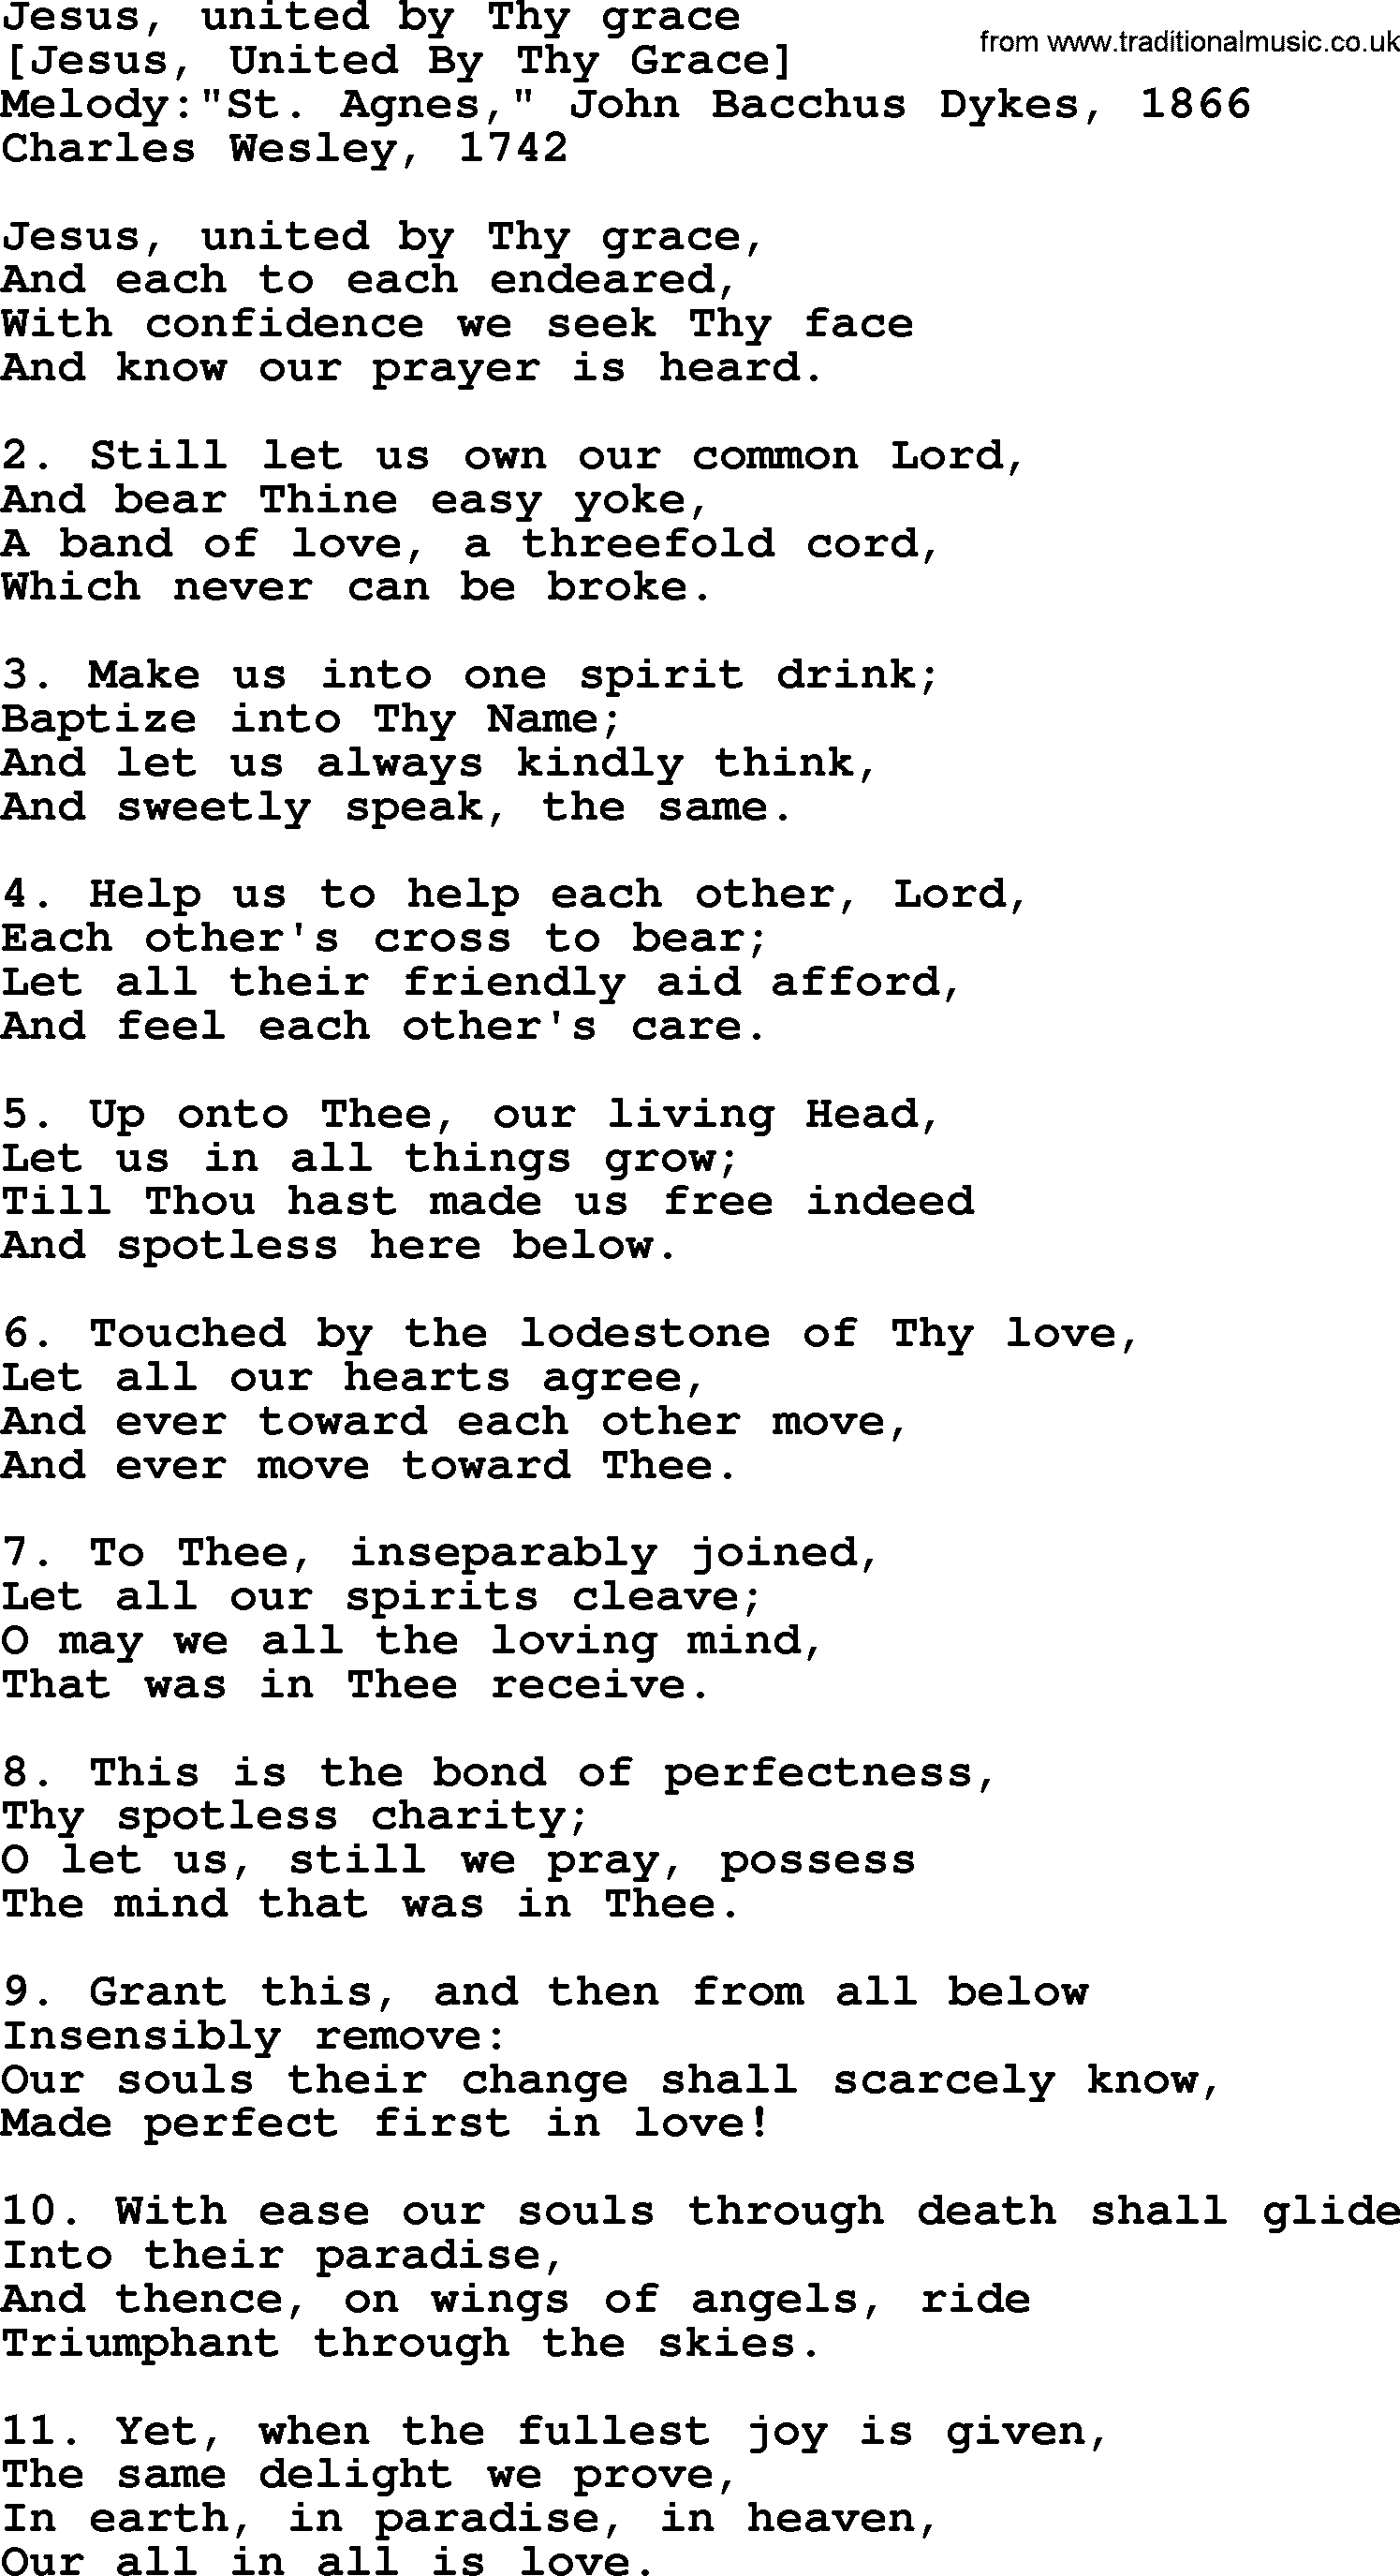 Old English Song: Jesus, United By Thy Grace lyrics